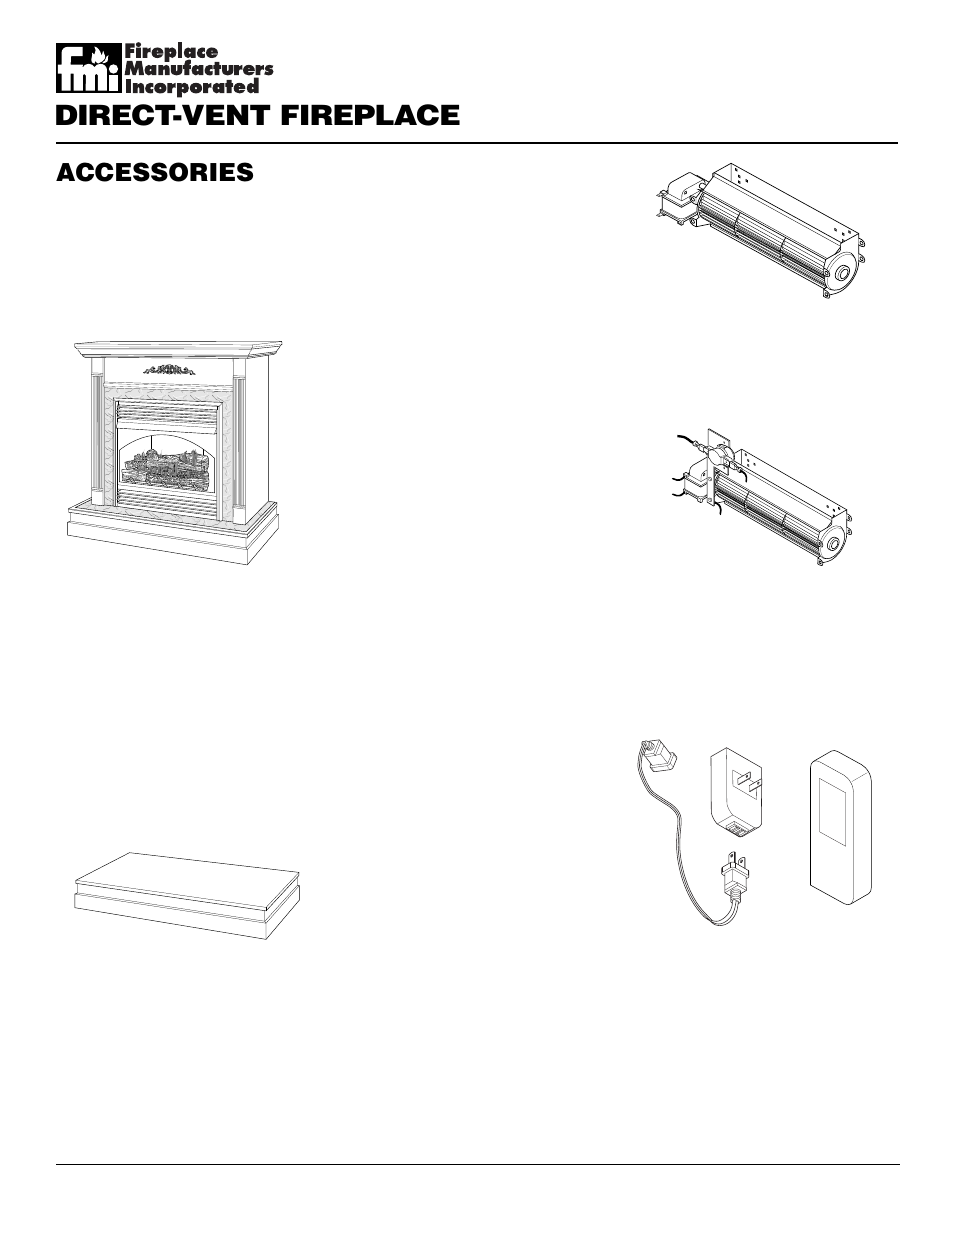 Direct-vent fireplace, Accessories, Manual blower kit ga3700 | Desa DVFE34  User Manual | Page 34 / 36 | Original mode